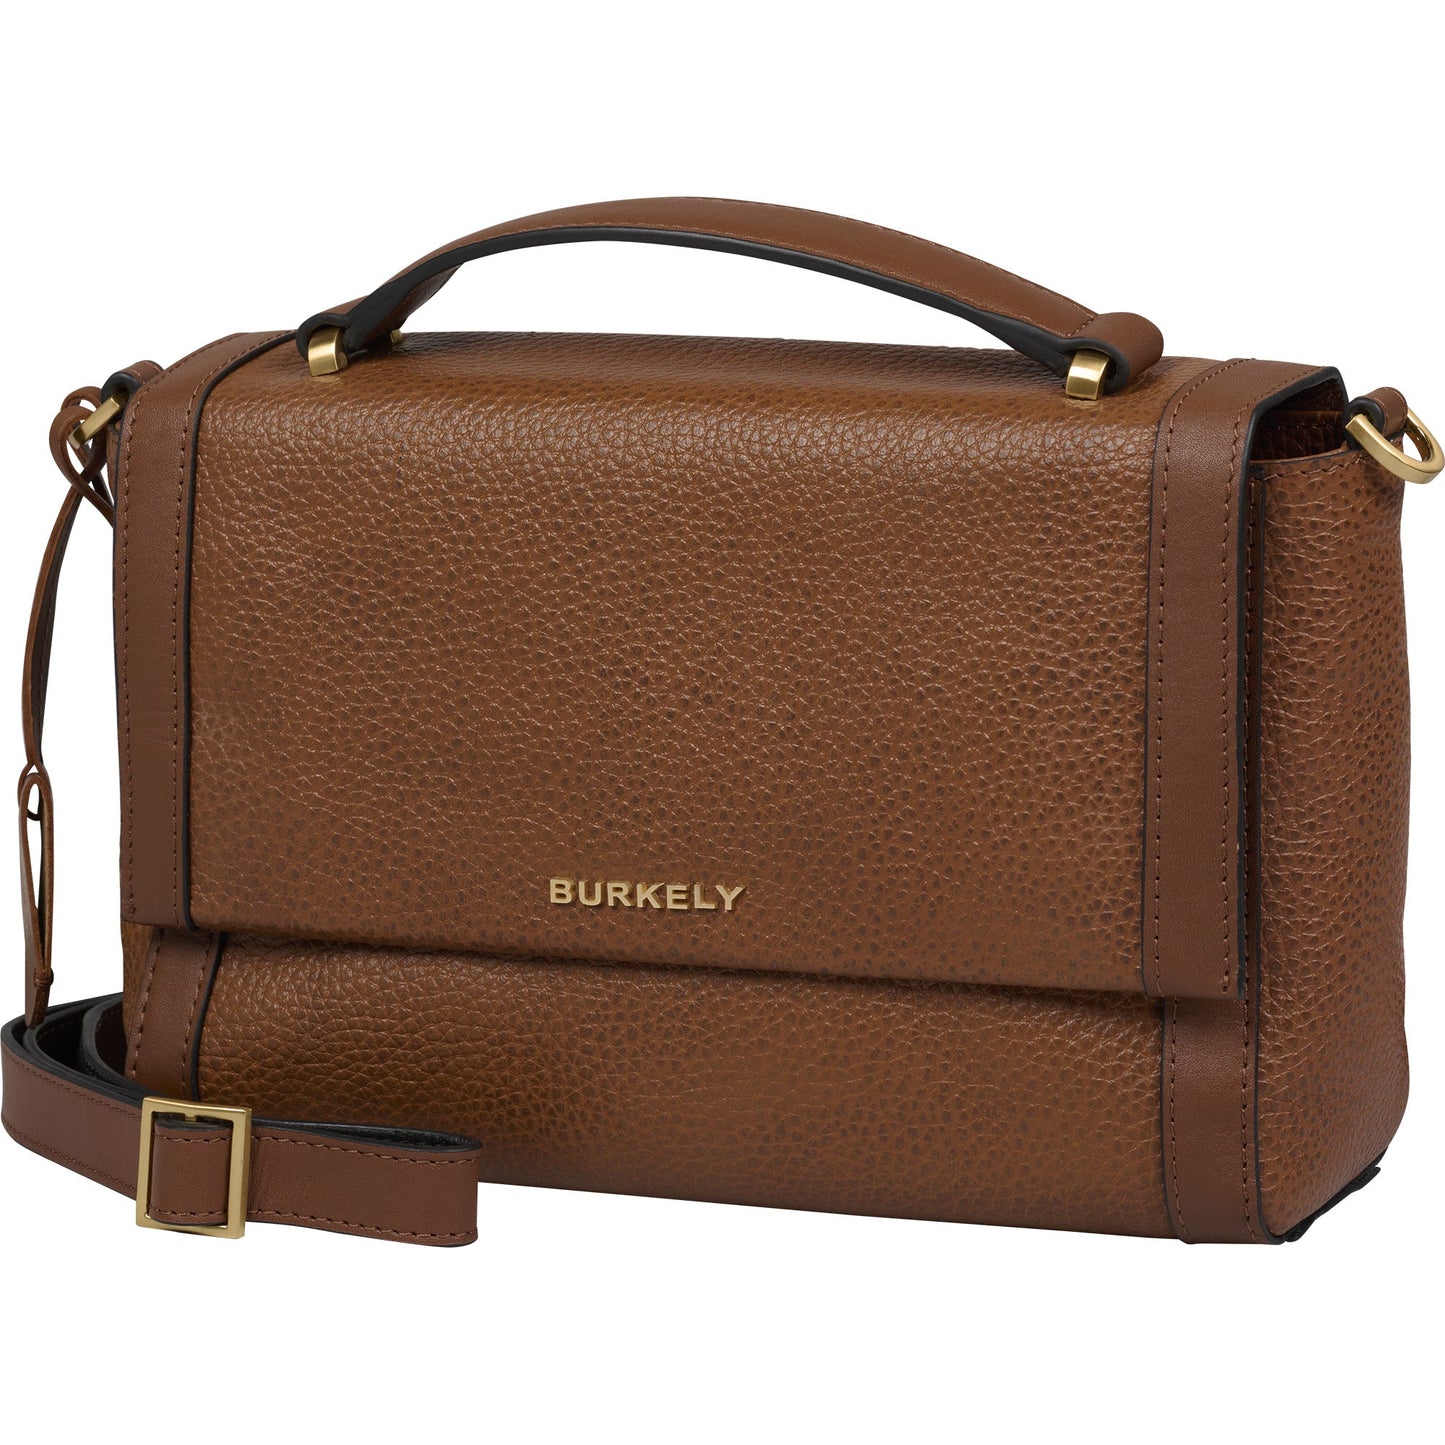 Handtasche Keen Keira 1000625.41 von Burkely - Laure Bags and Travel